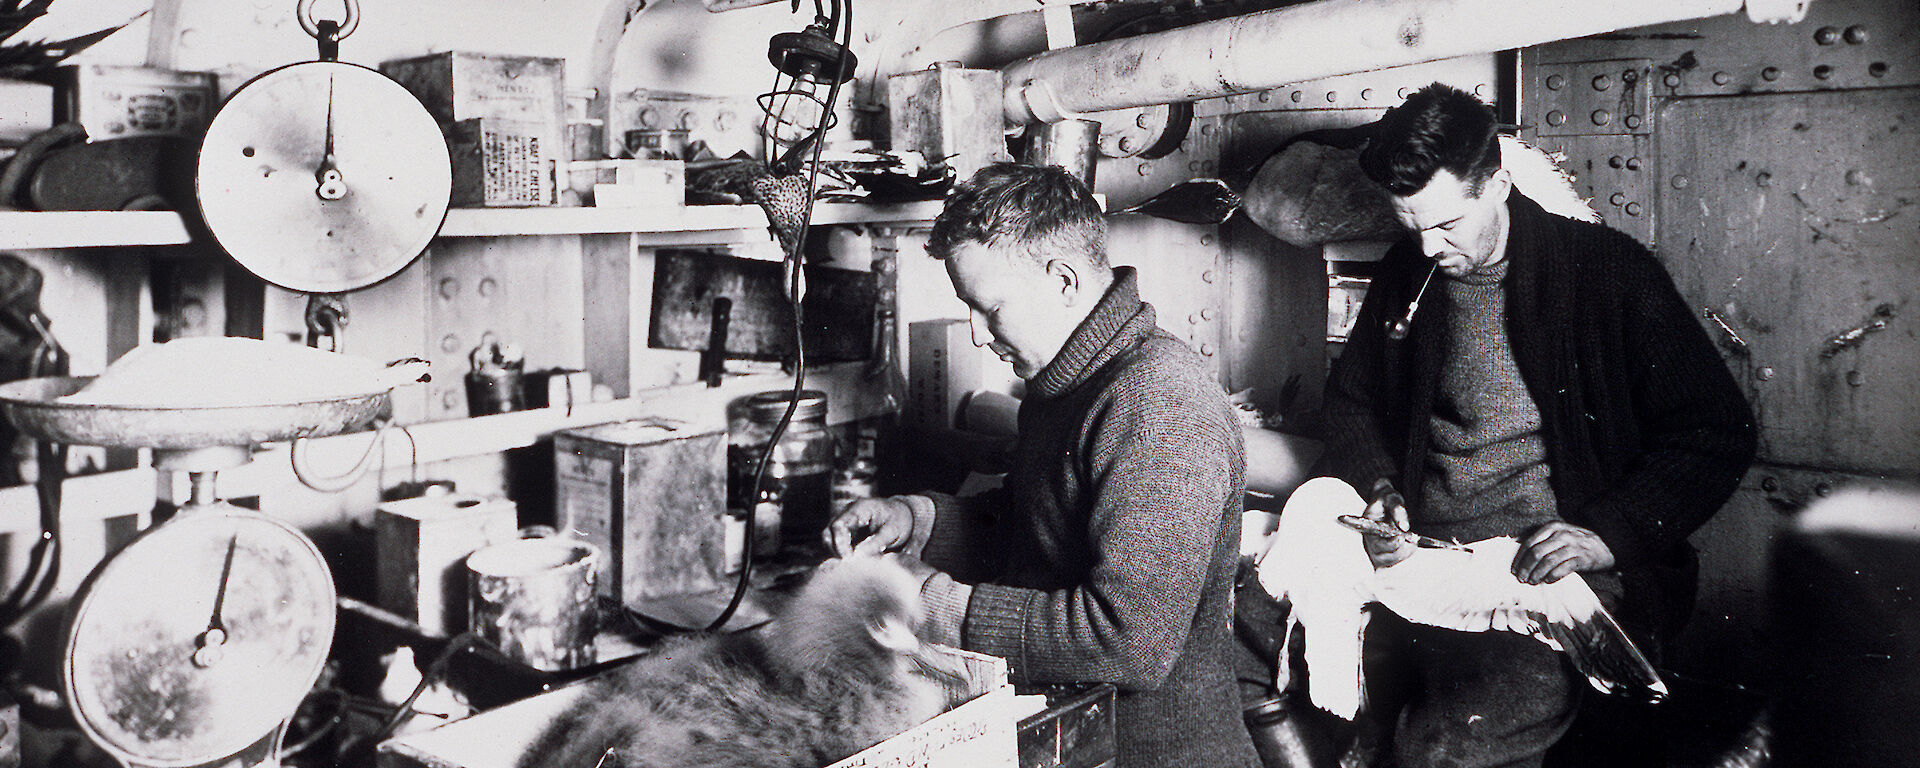 A vintage photo of 2 men preparing bird specimens and other scientific samples